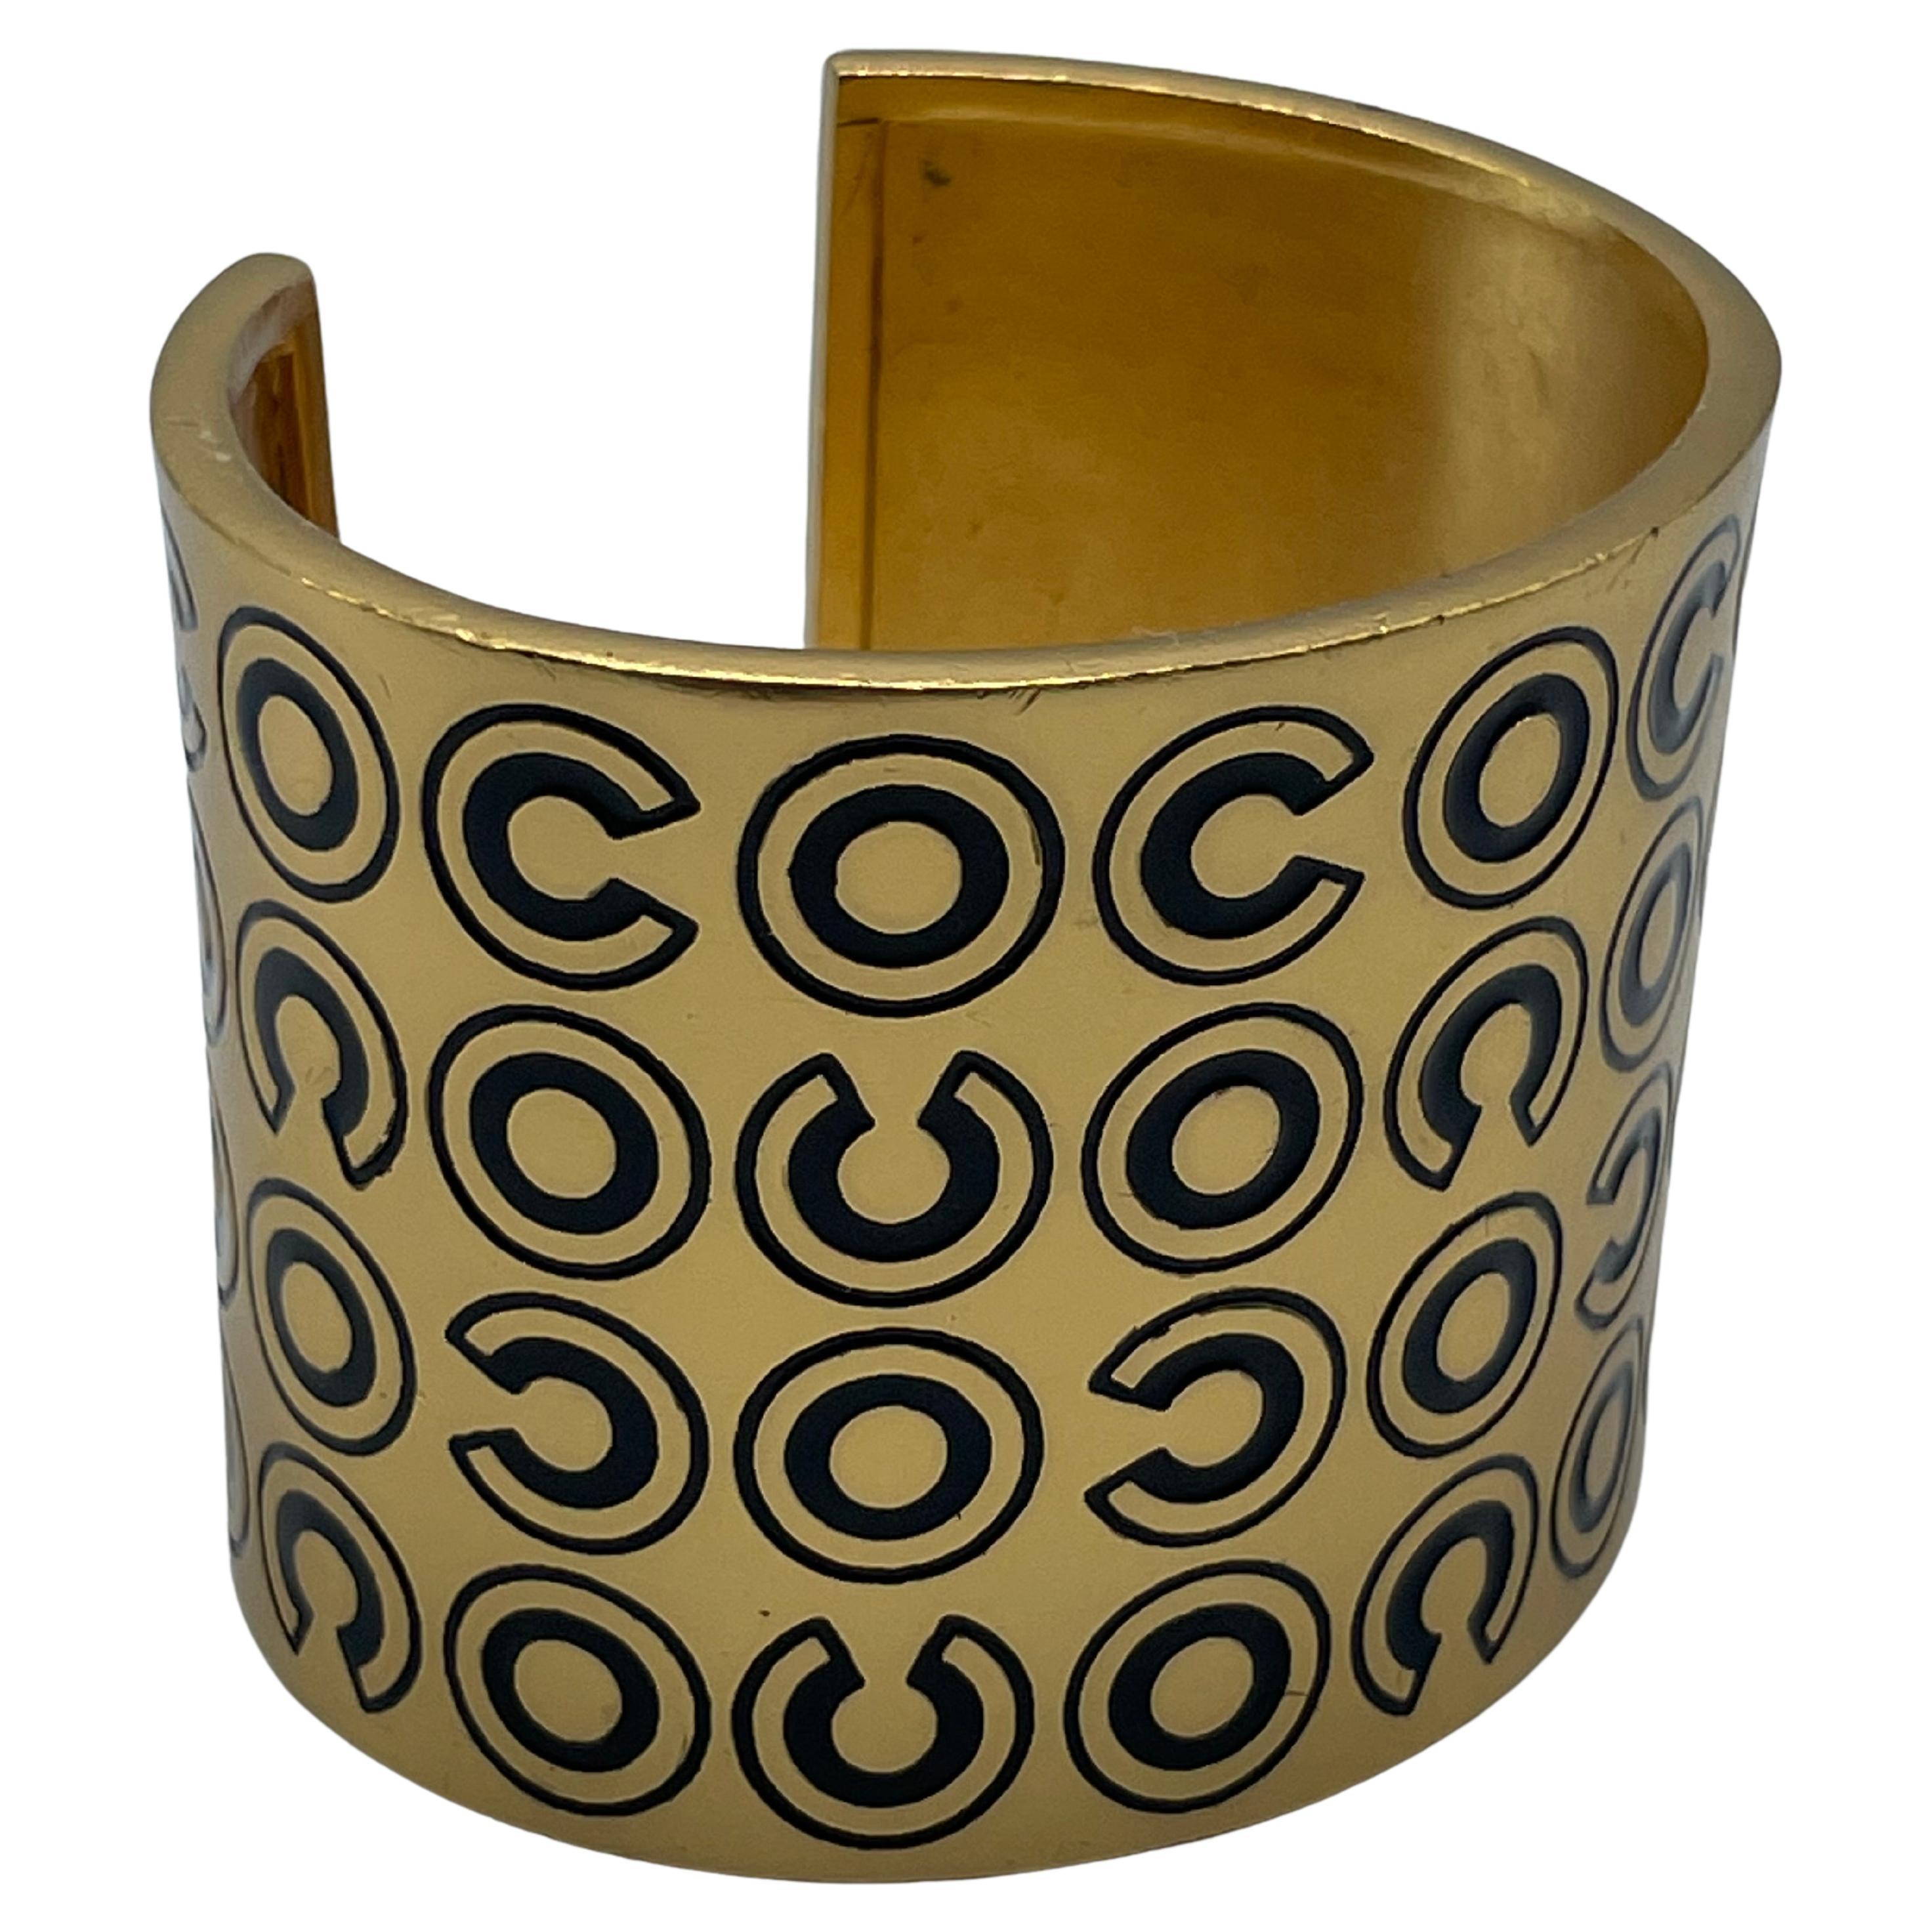 Chanel Gold Metal Micro Pearl Bag Cuff Bracelet